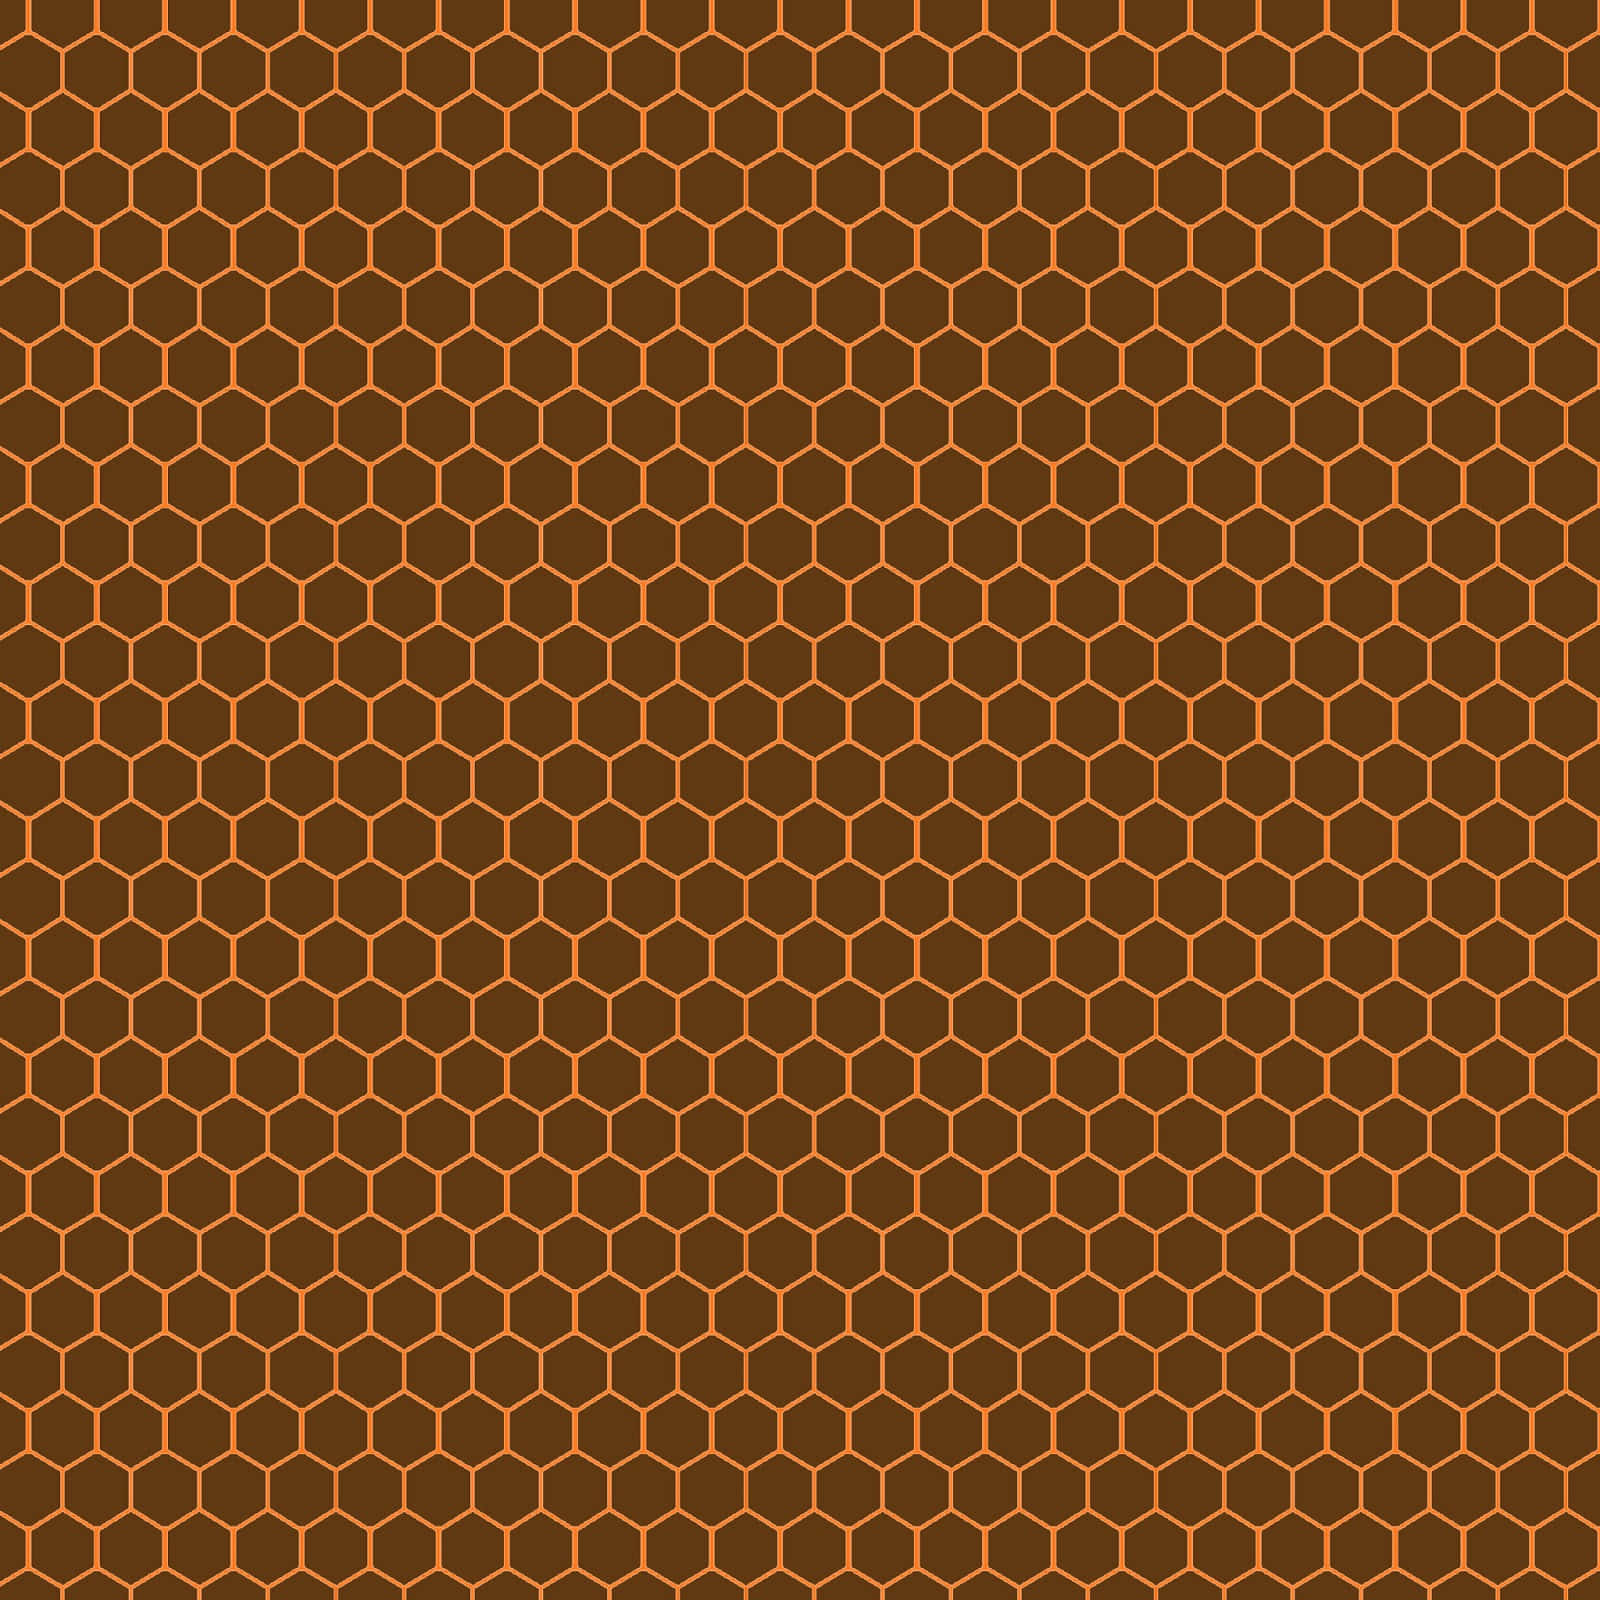 Honeycomb Background